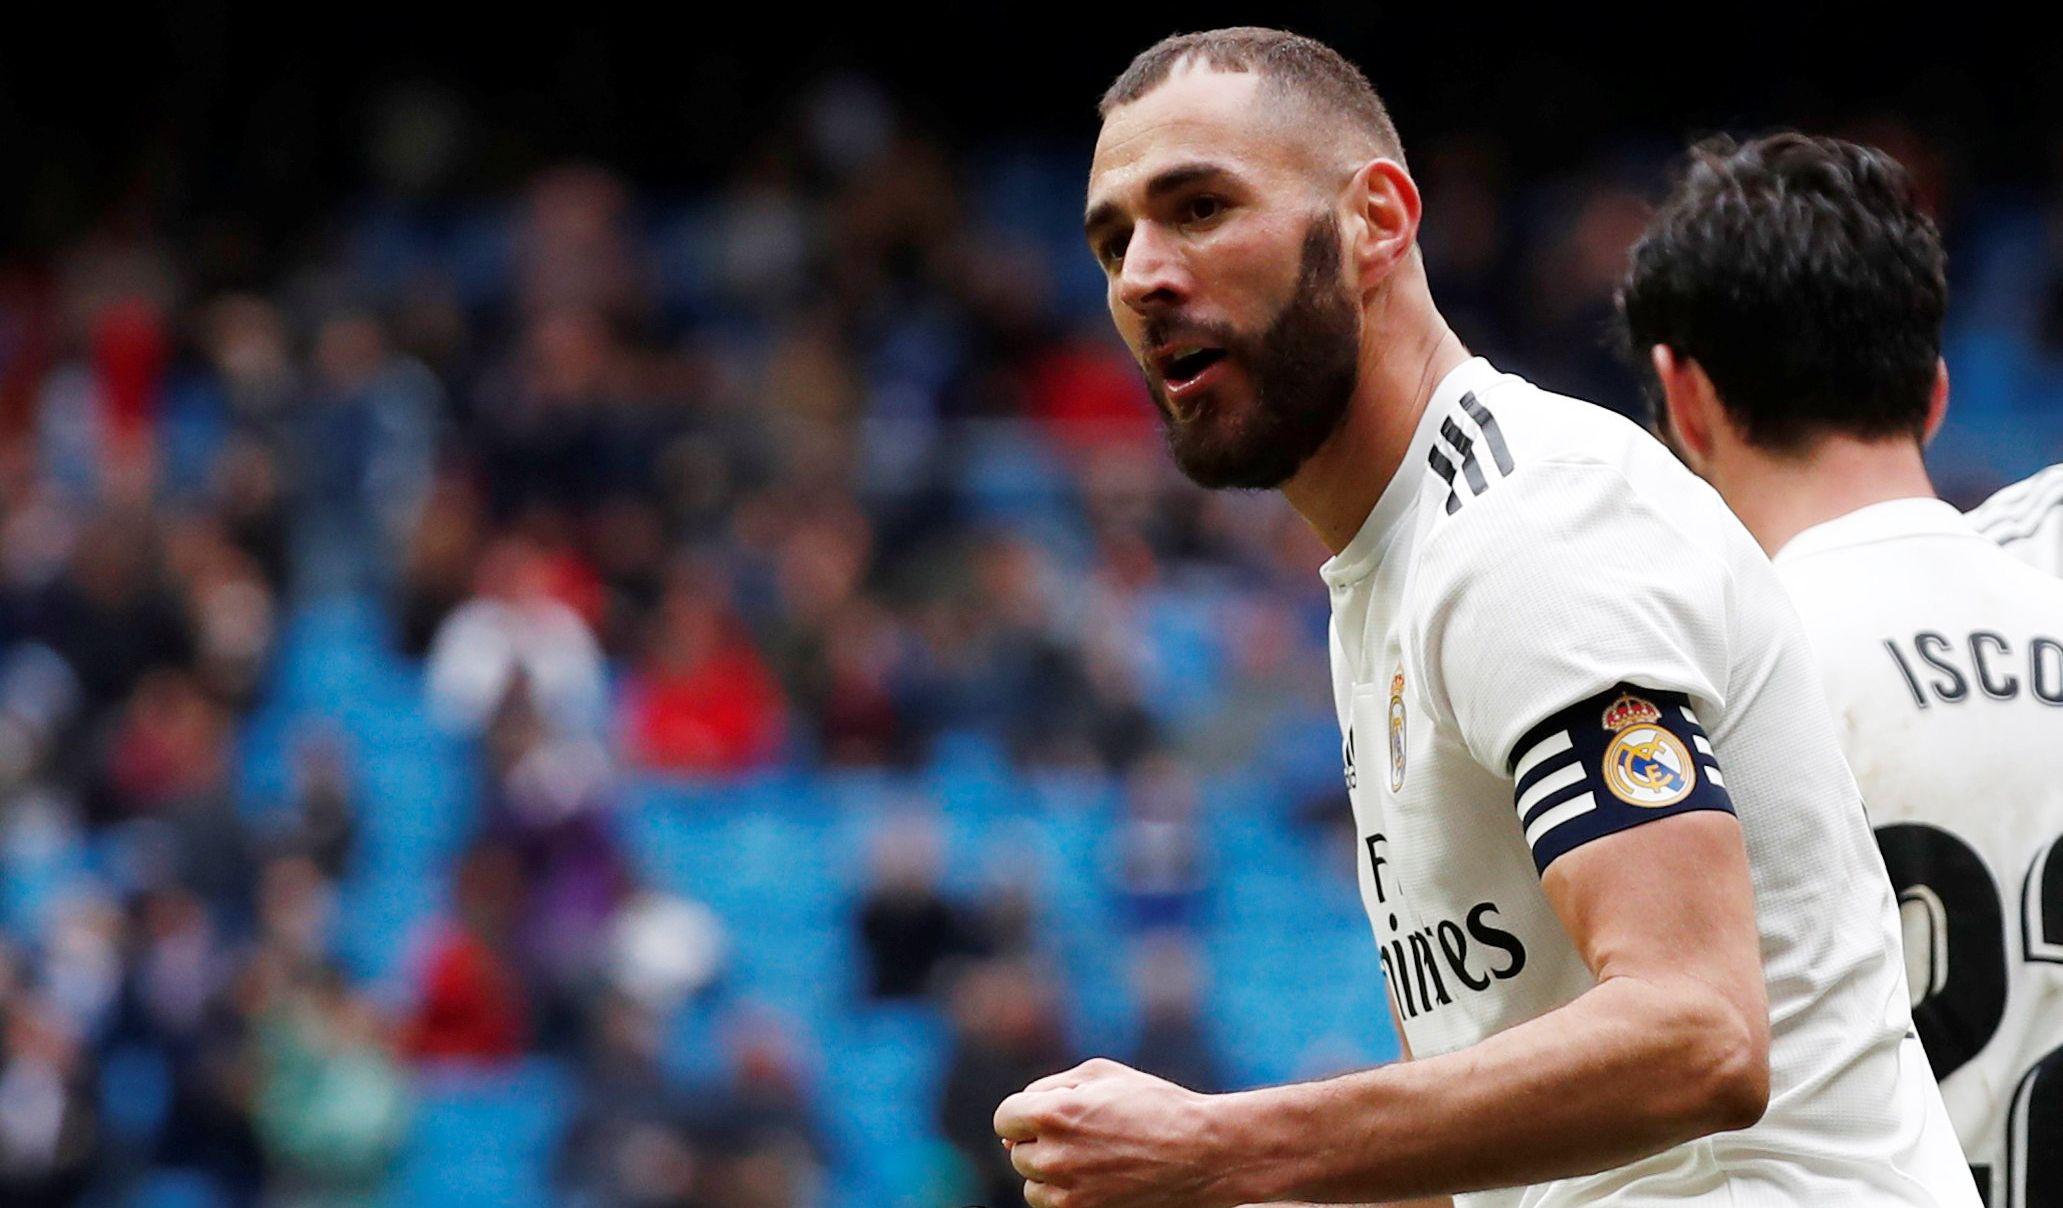 Real Madrid ganó 2-1 al Eibar con doblete de Karim Benzema por la fecha 31° de la Liga española | VIDEO. (Foto: AFP)